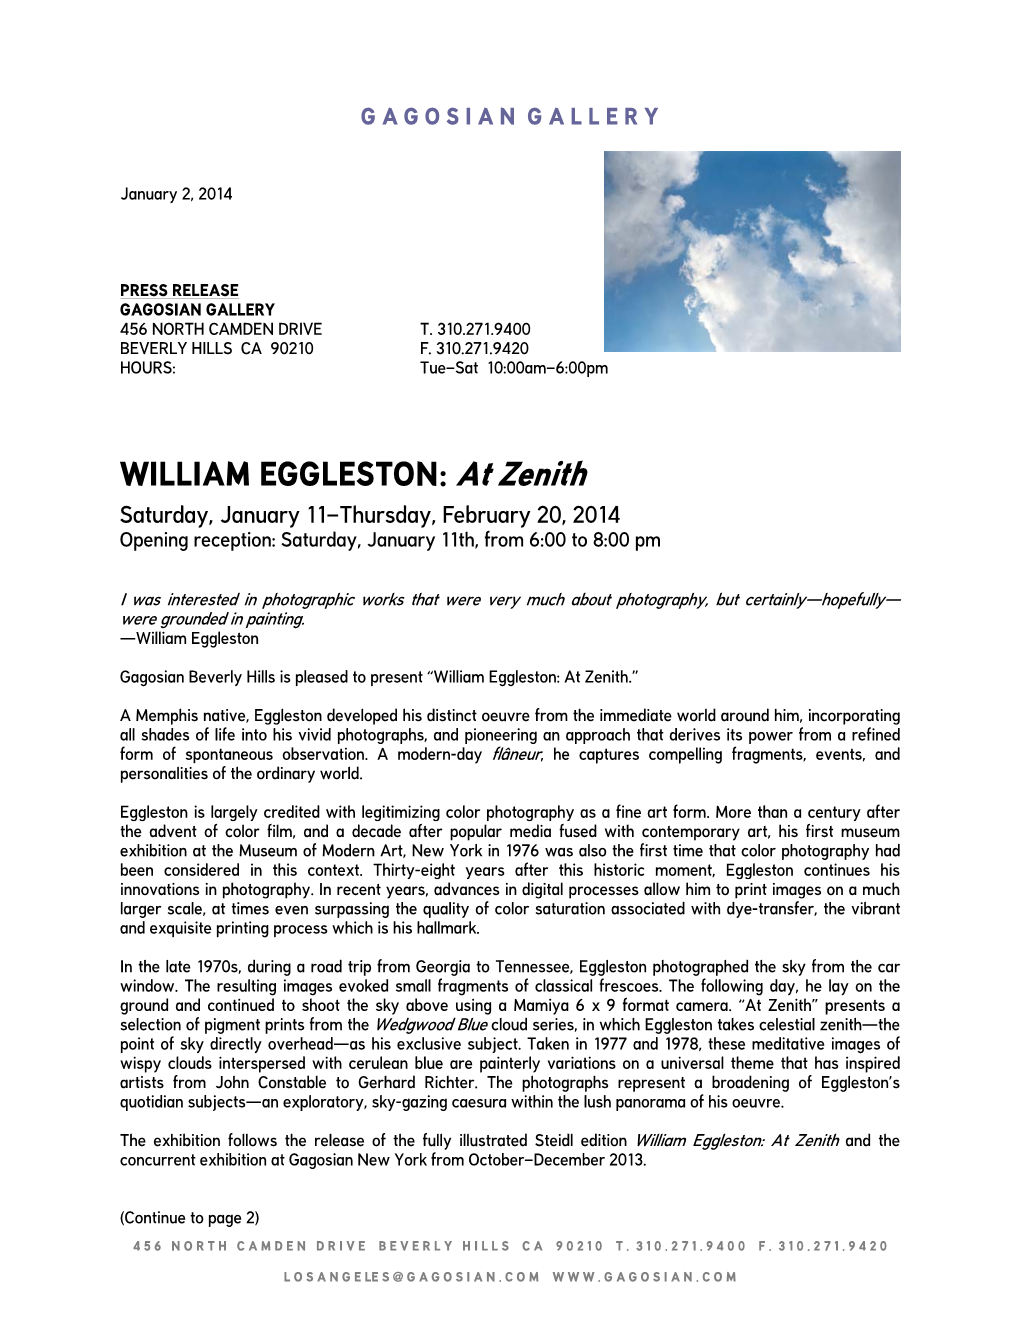 WILLIAM EGGLESTON: at Zenith